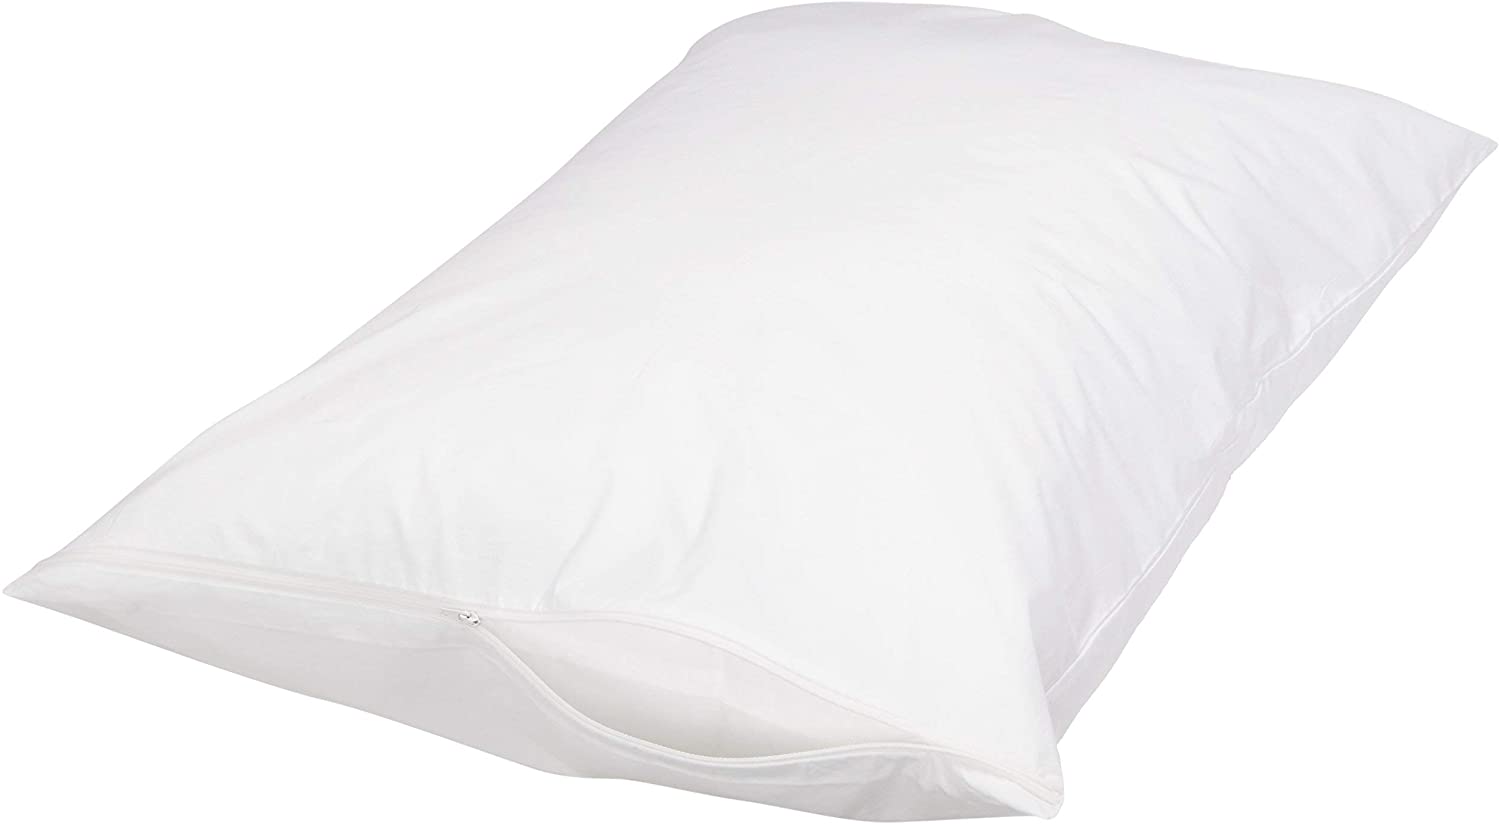 AmazonBasics Vinyl-Free Zippered Pillow Protector